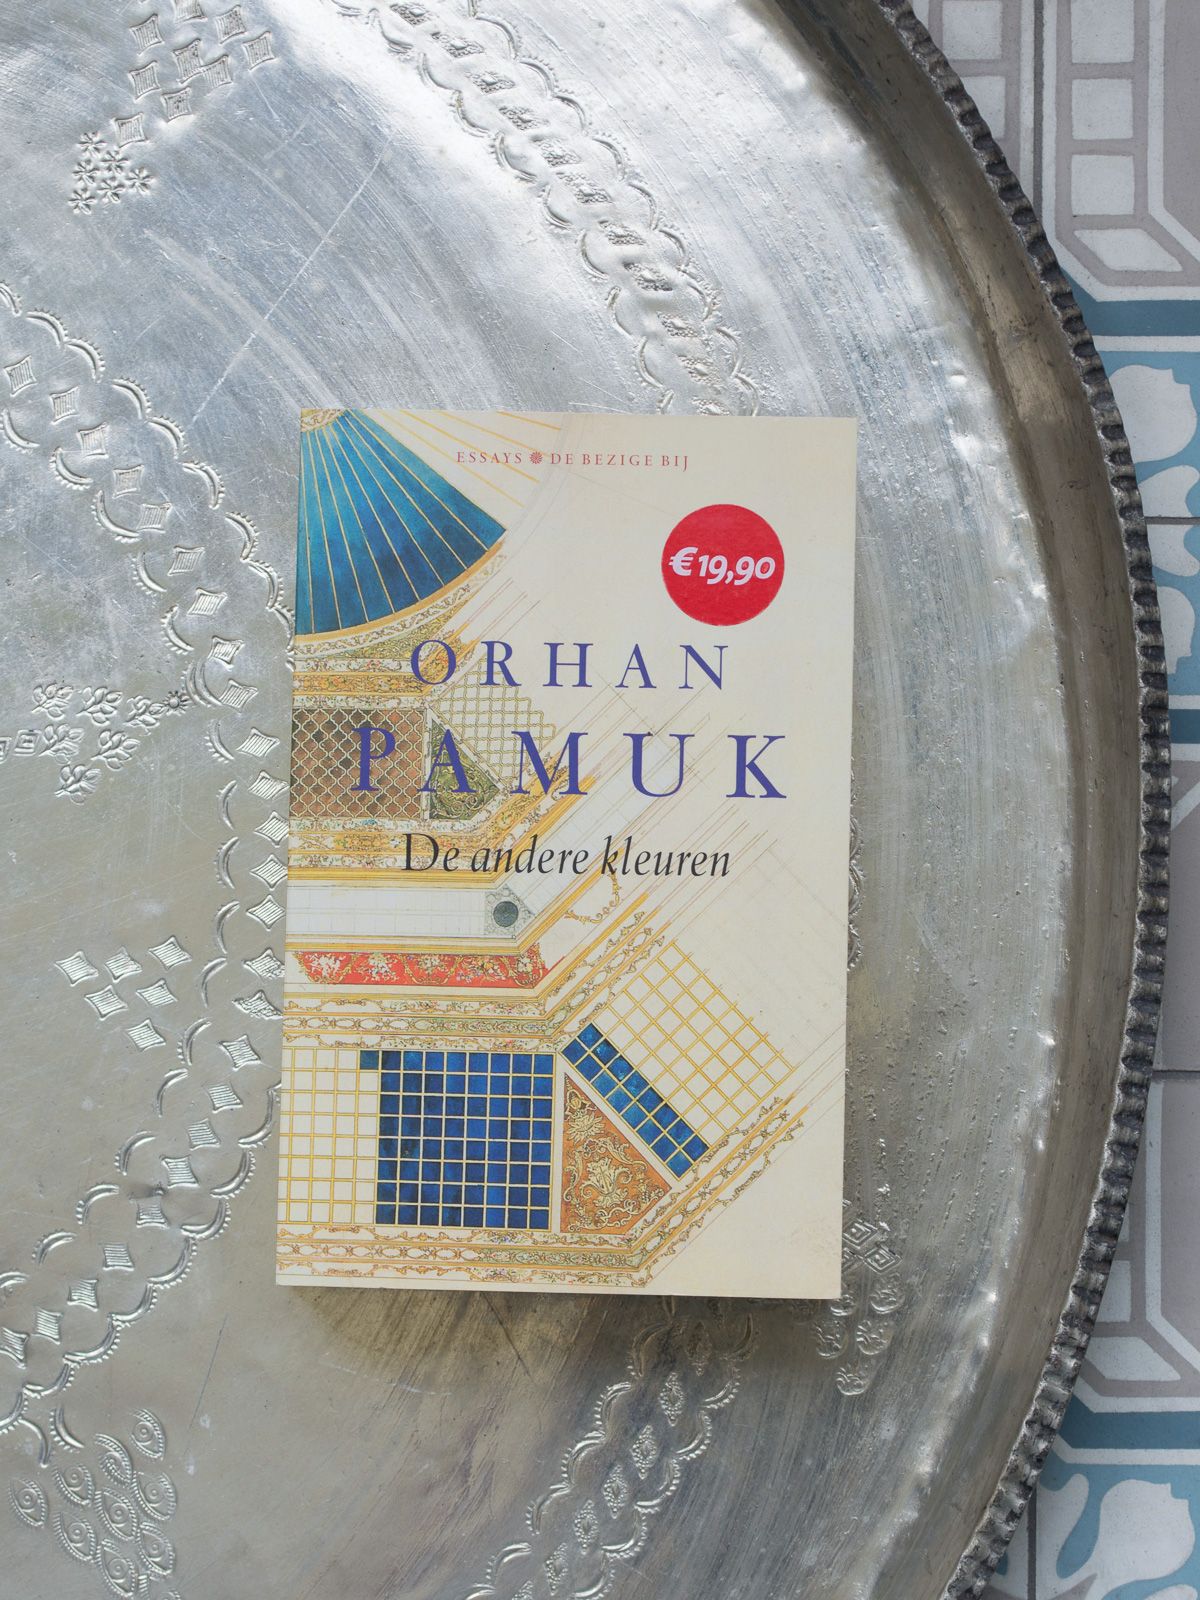 De andere kleuren - Orhan Pamuk - paperback